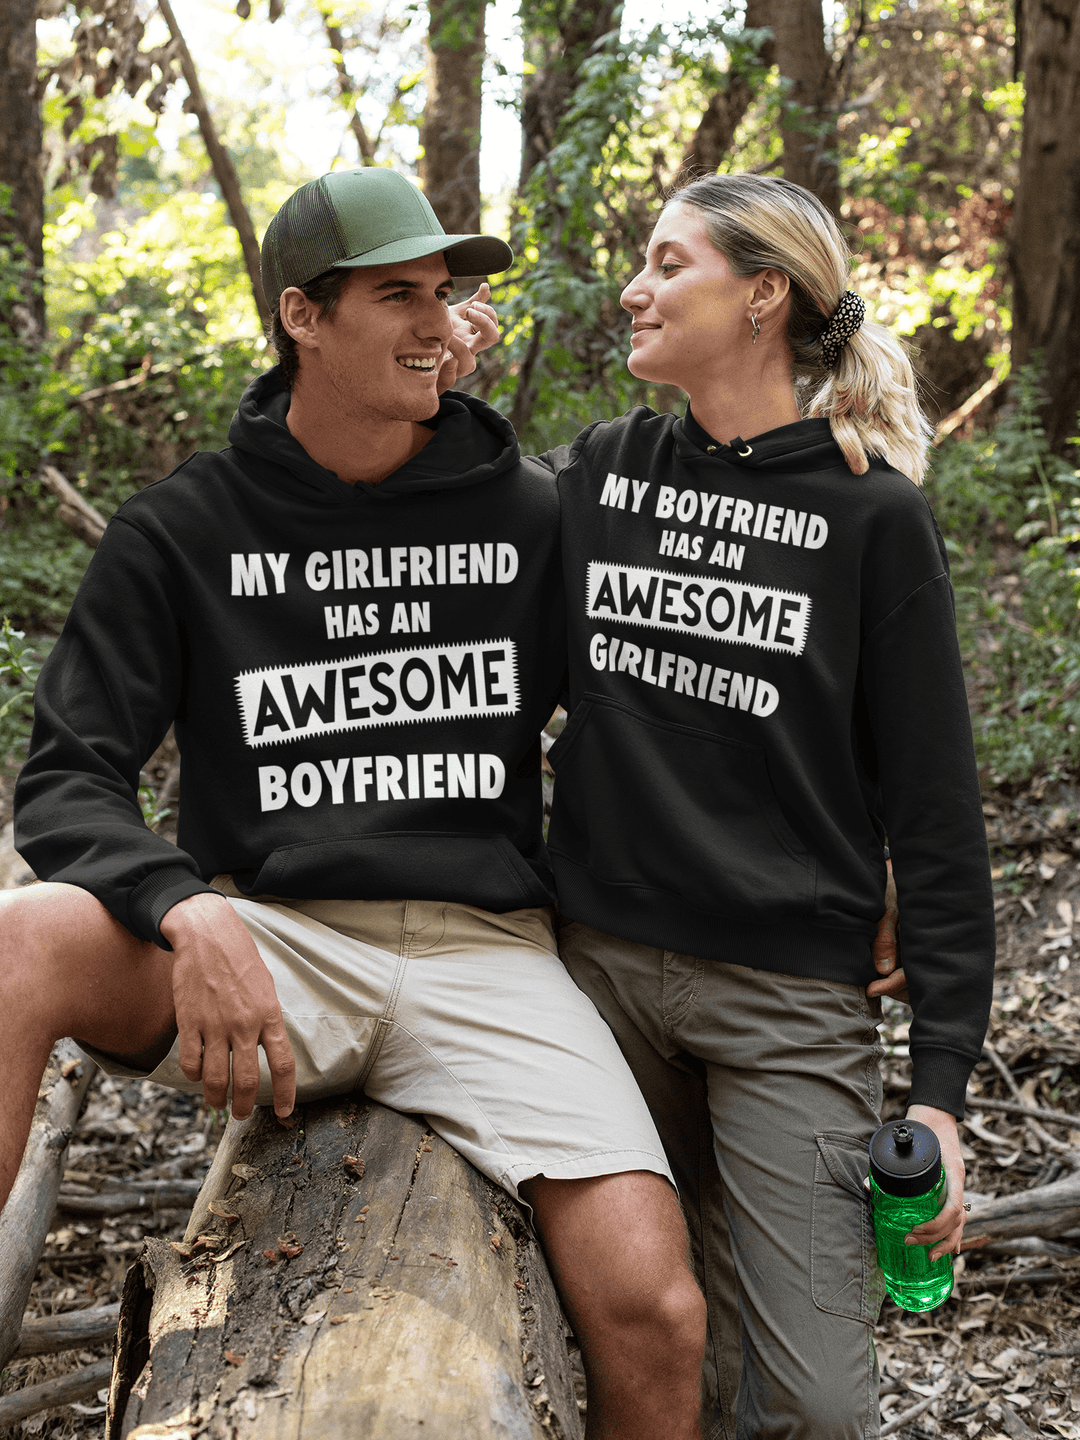 Awesome Boyfriend/Girlfriend Relationship Hoodie Set Ultra Soft Blended Cotton Midweight Pullover - TopKoalaTee